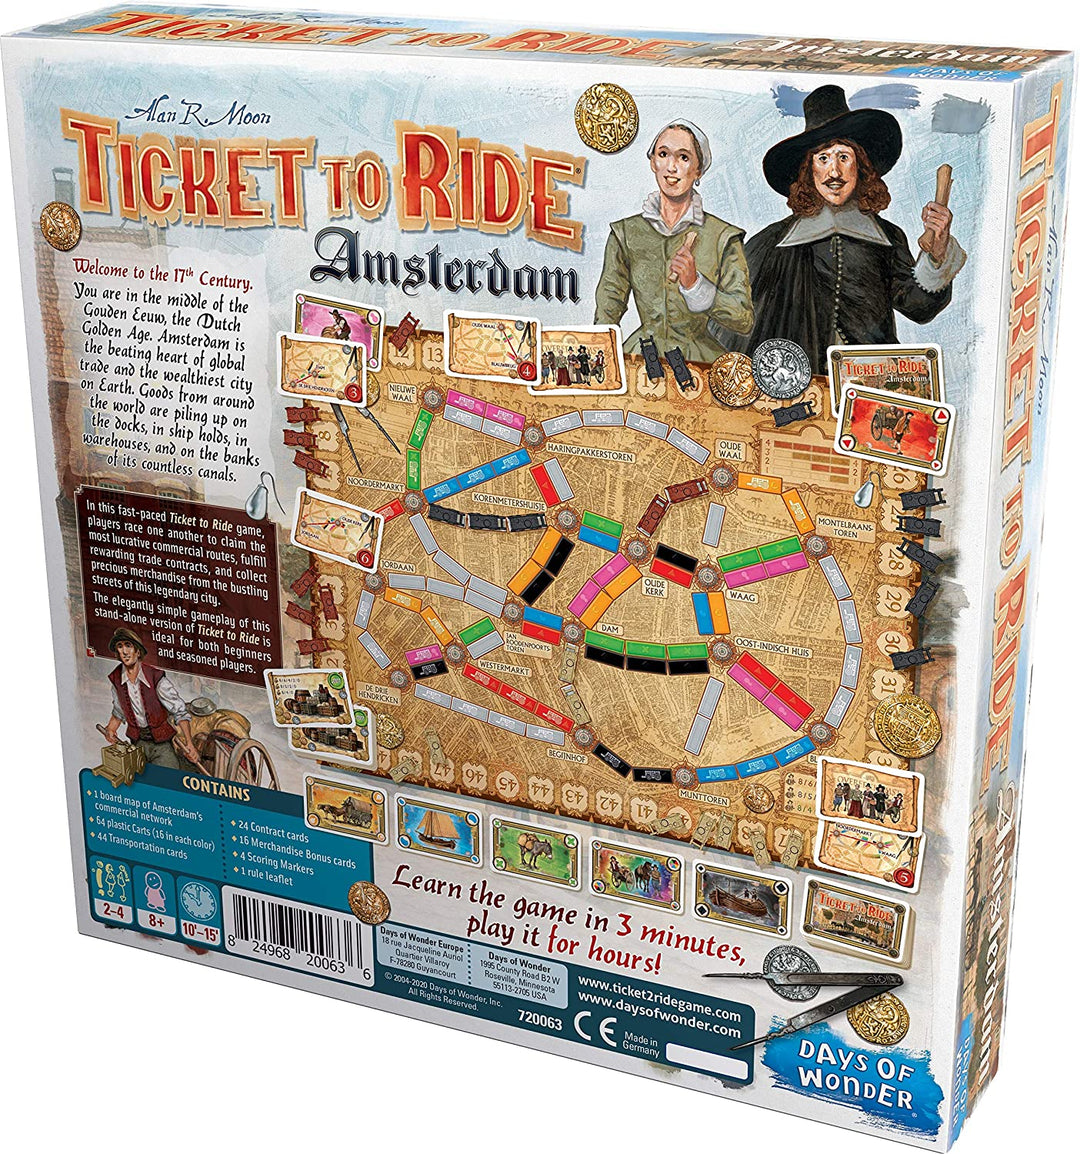 Days of Wonder - Ticket to Ride Amsterdam Board Game